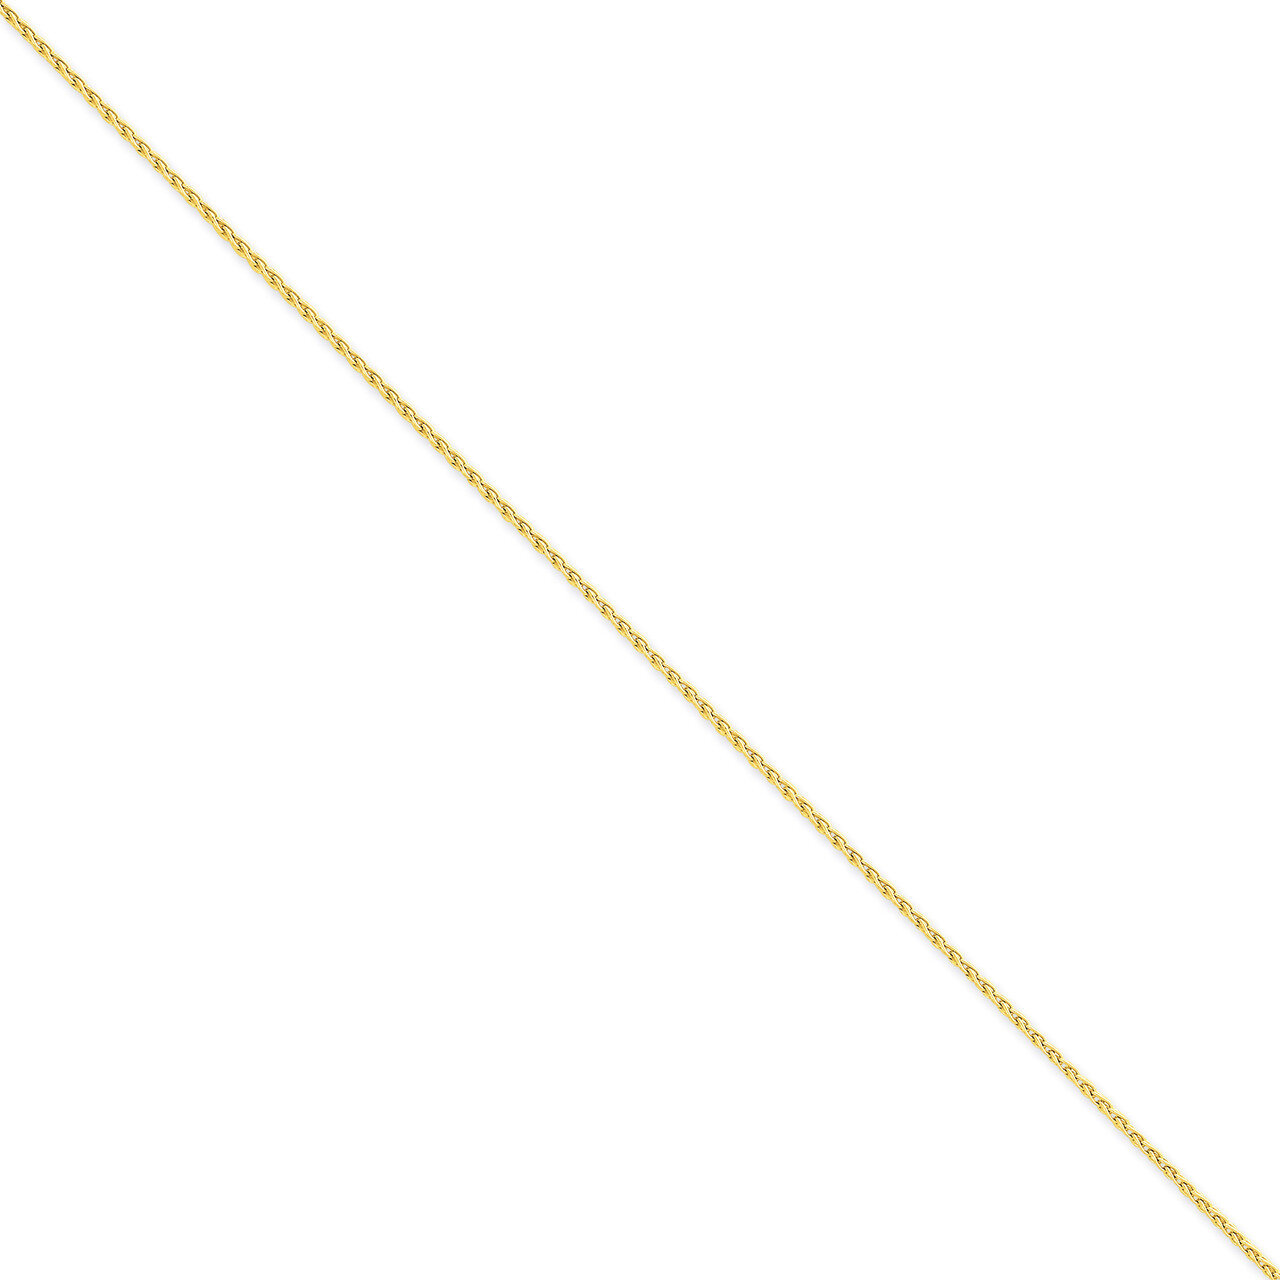 1.5mm Parisian Wheat Chain 24 Inch 14k Gold PEN266-24